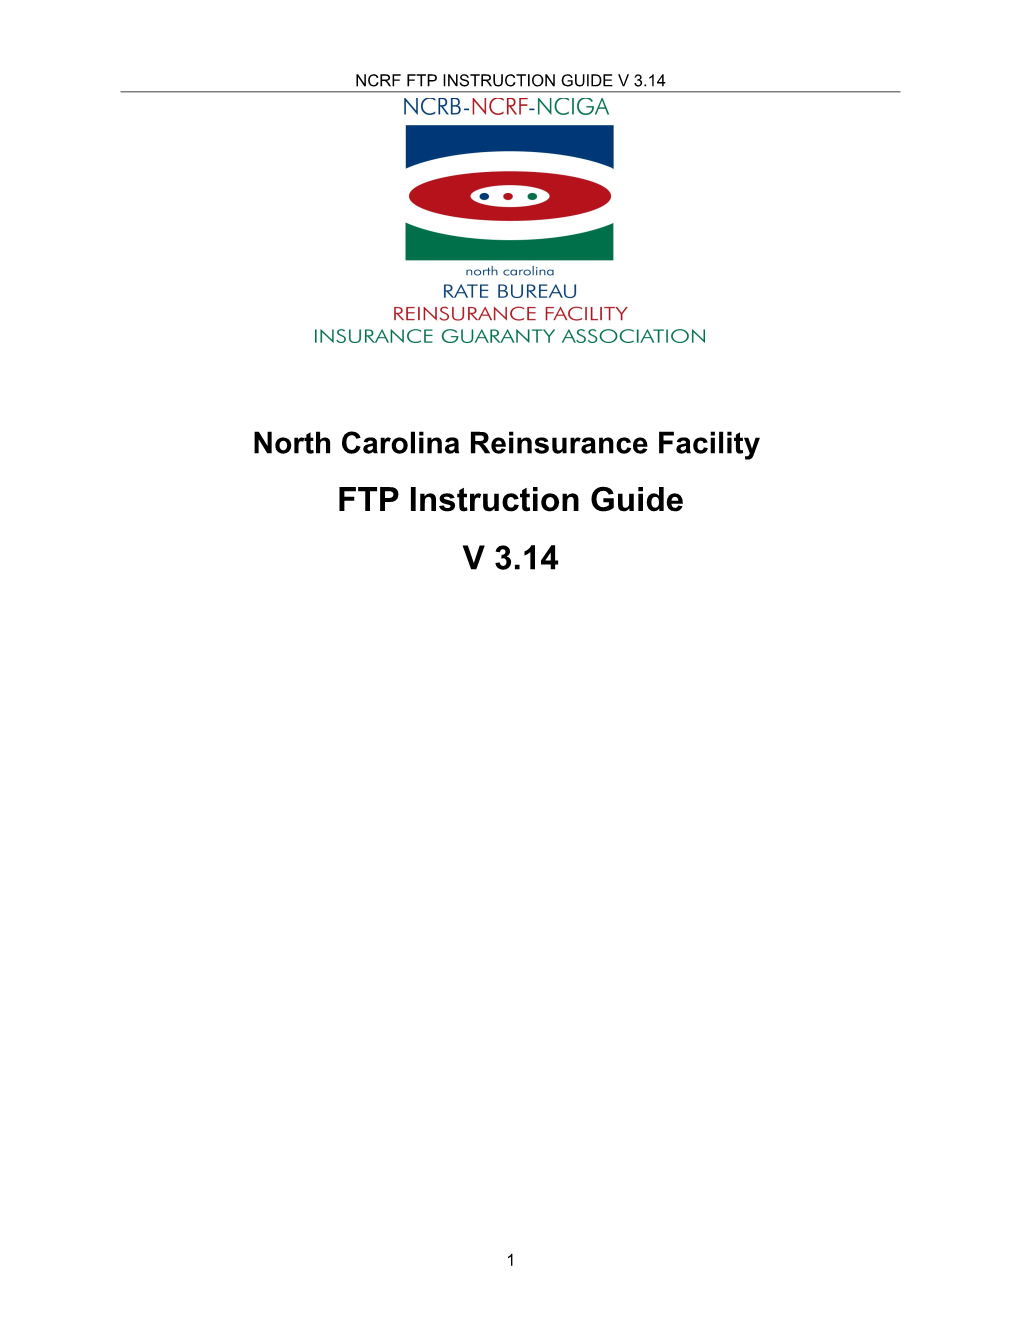 North Carolina Reinsurance Facility FTP Instruction Guide